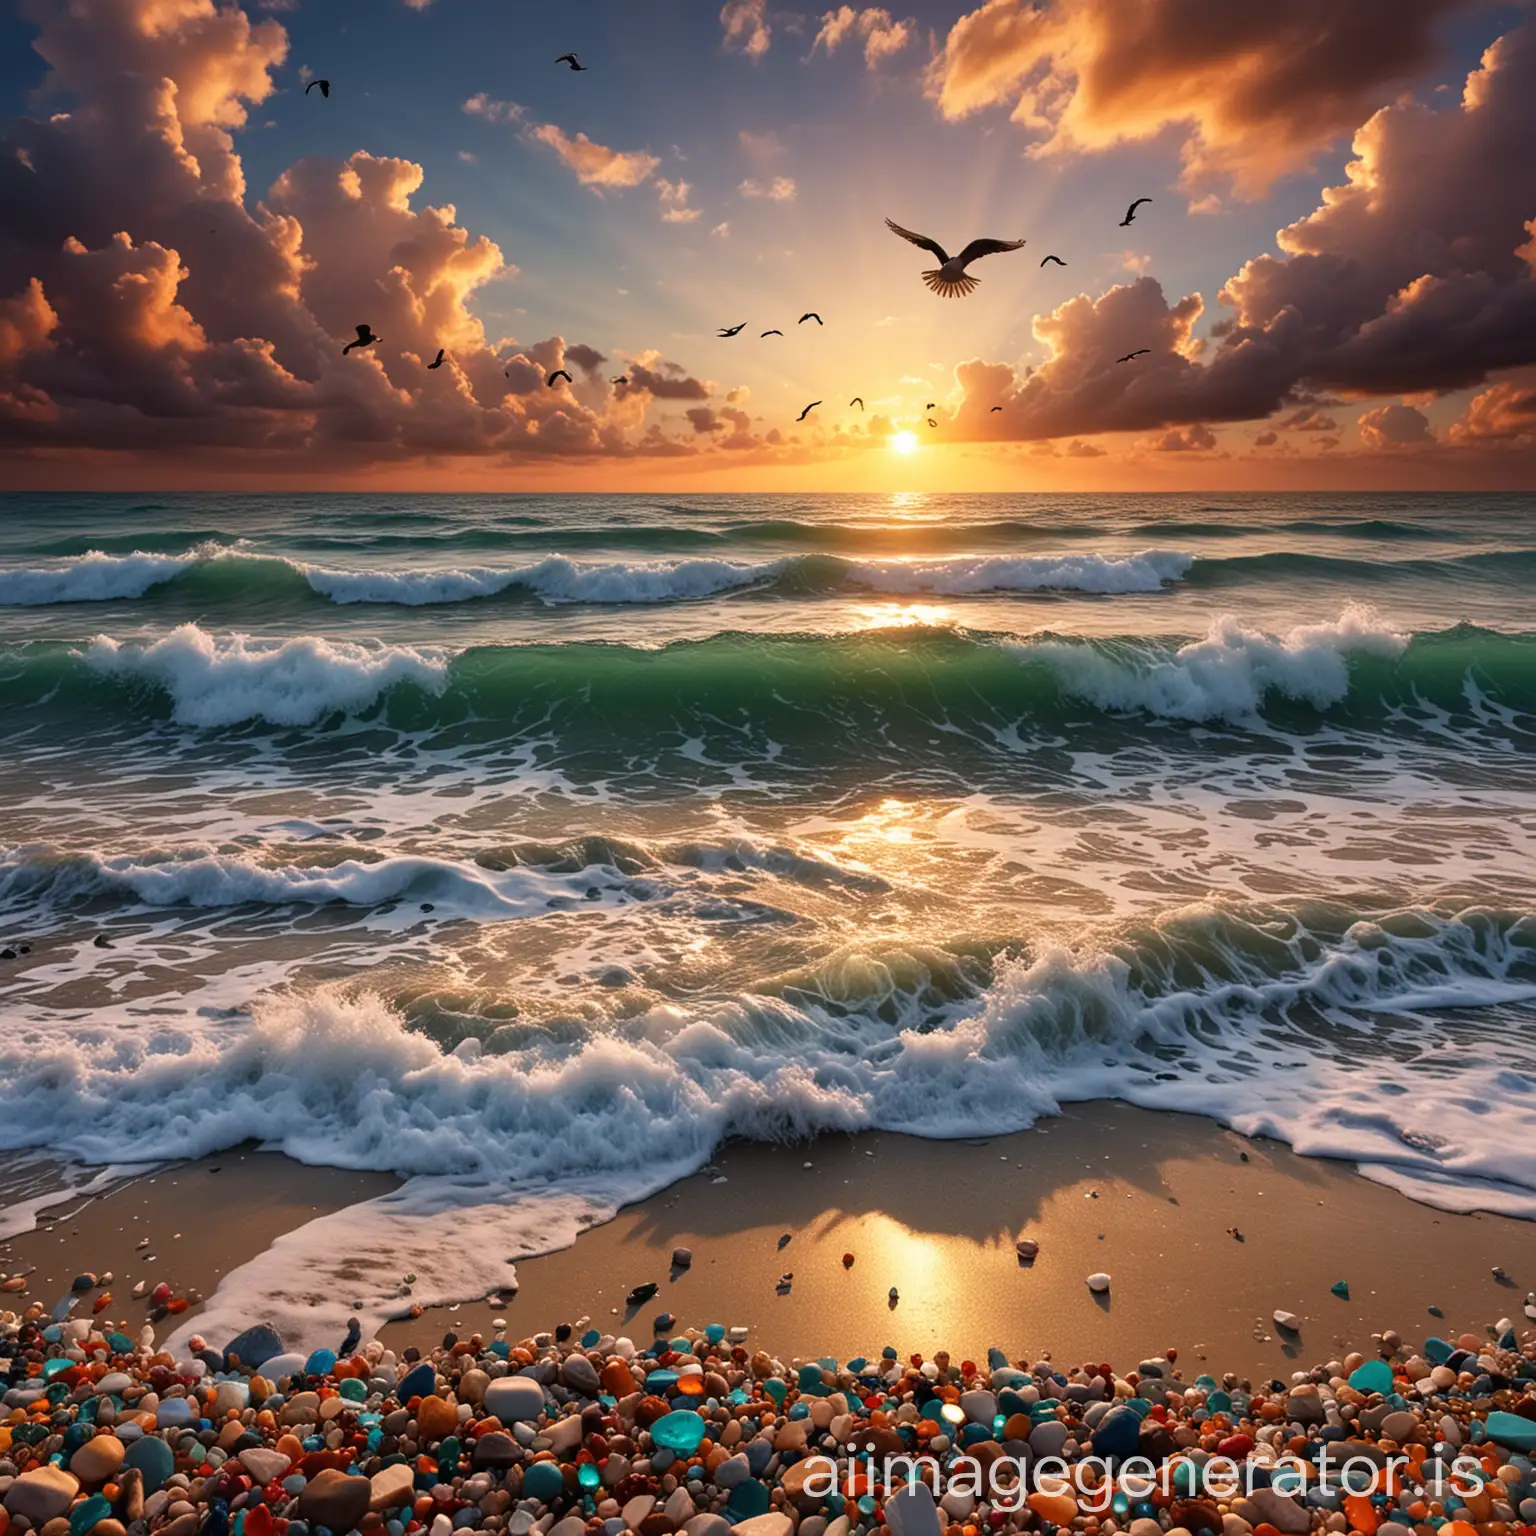 ocean sea beach sunset waves gemstones birds sky clouds tropical